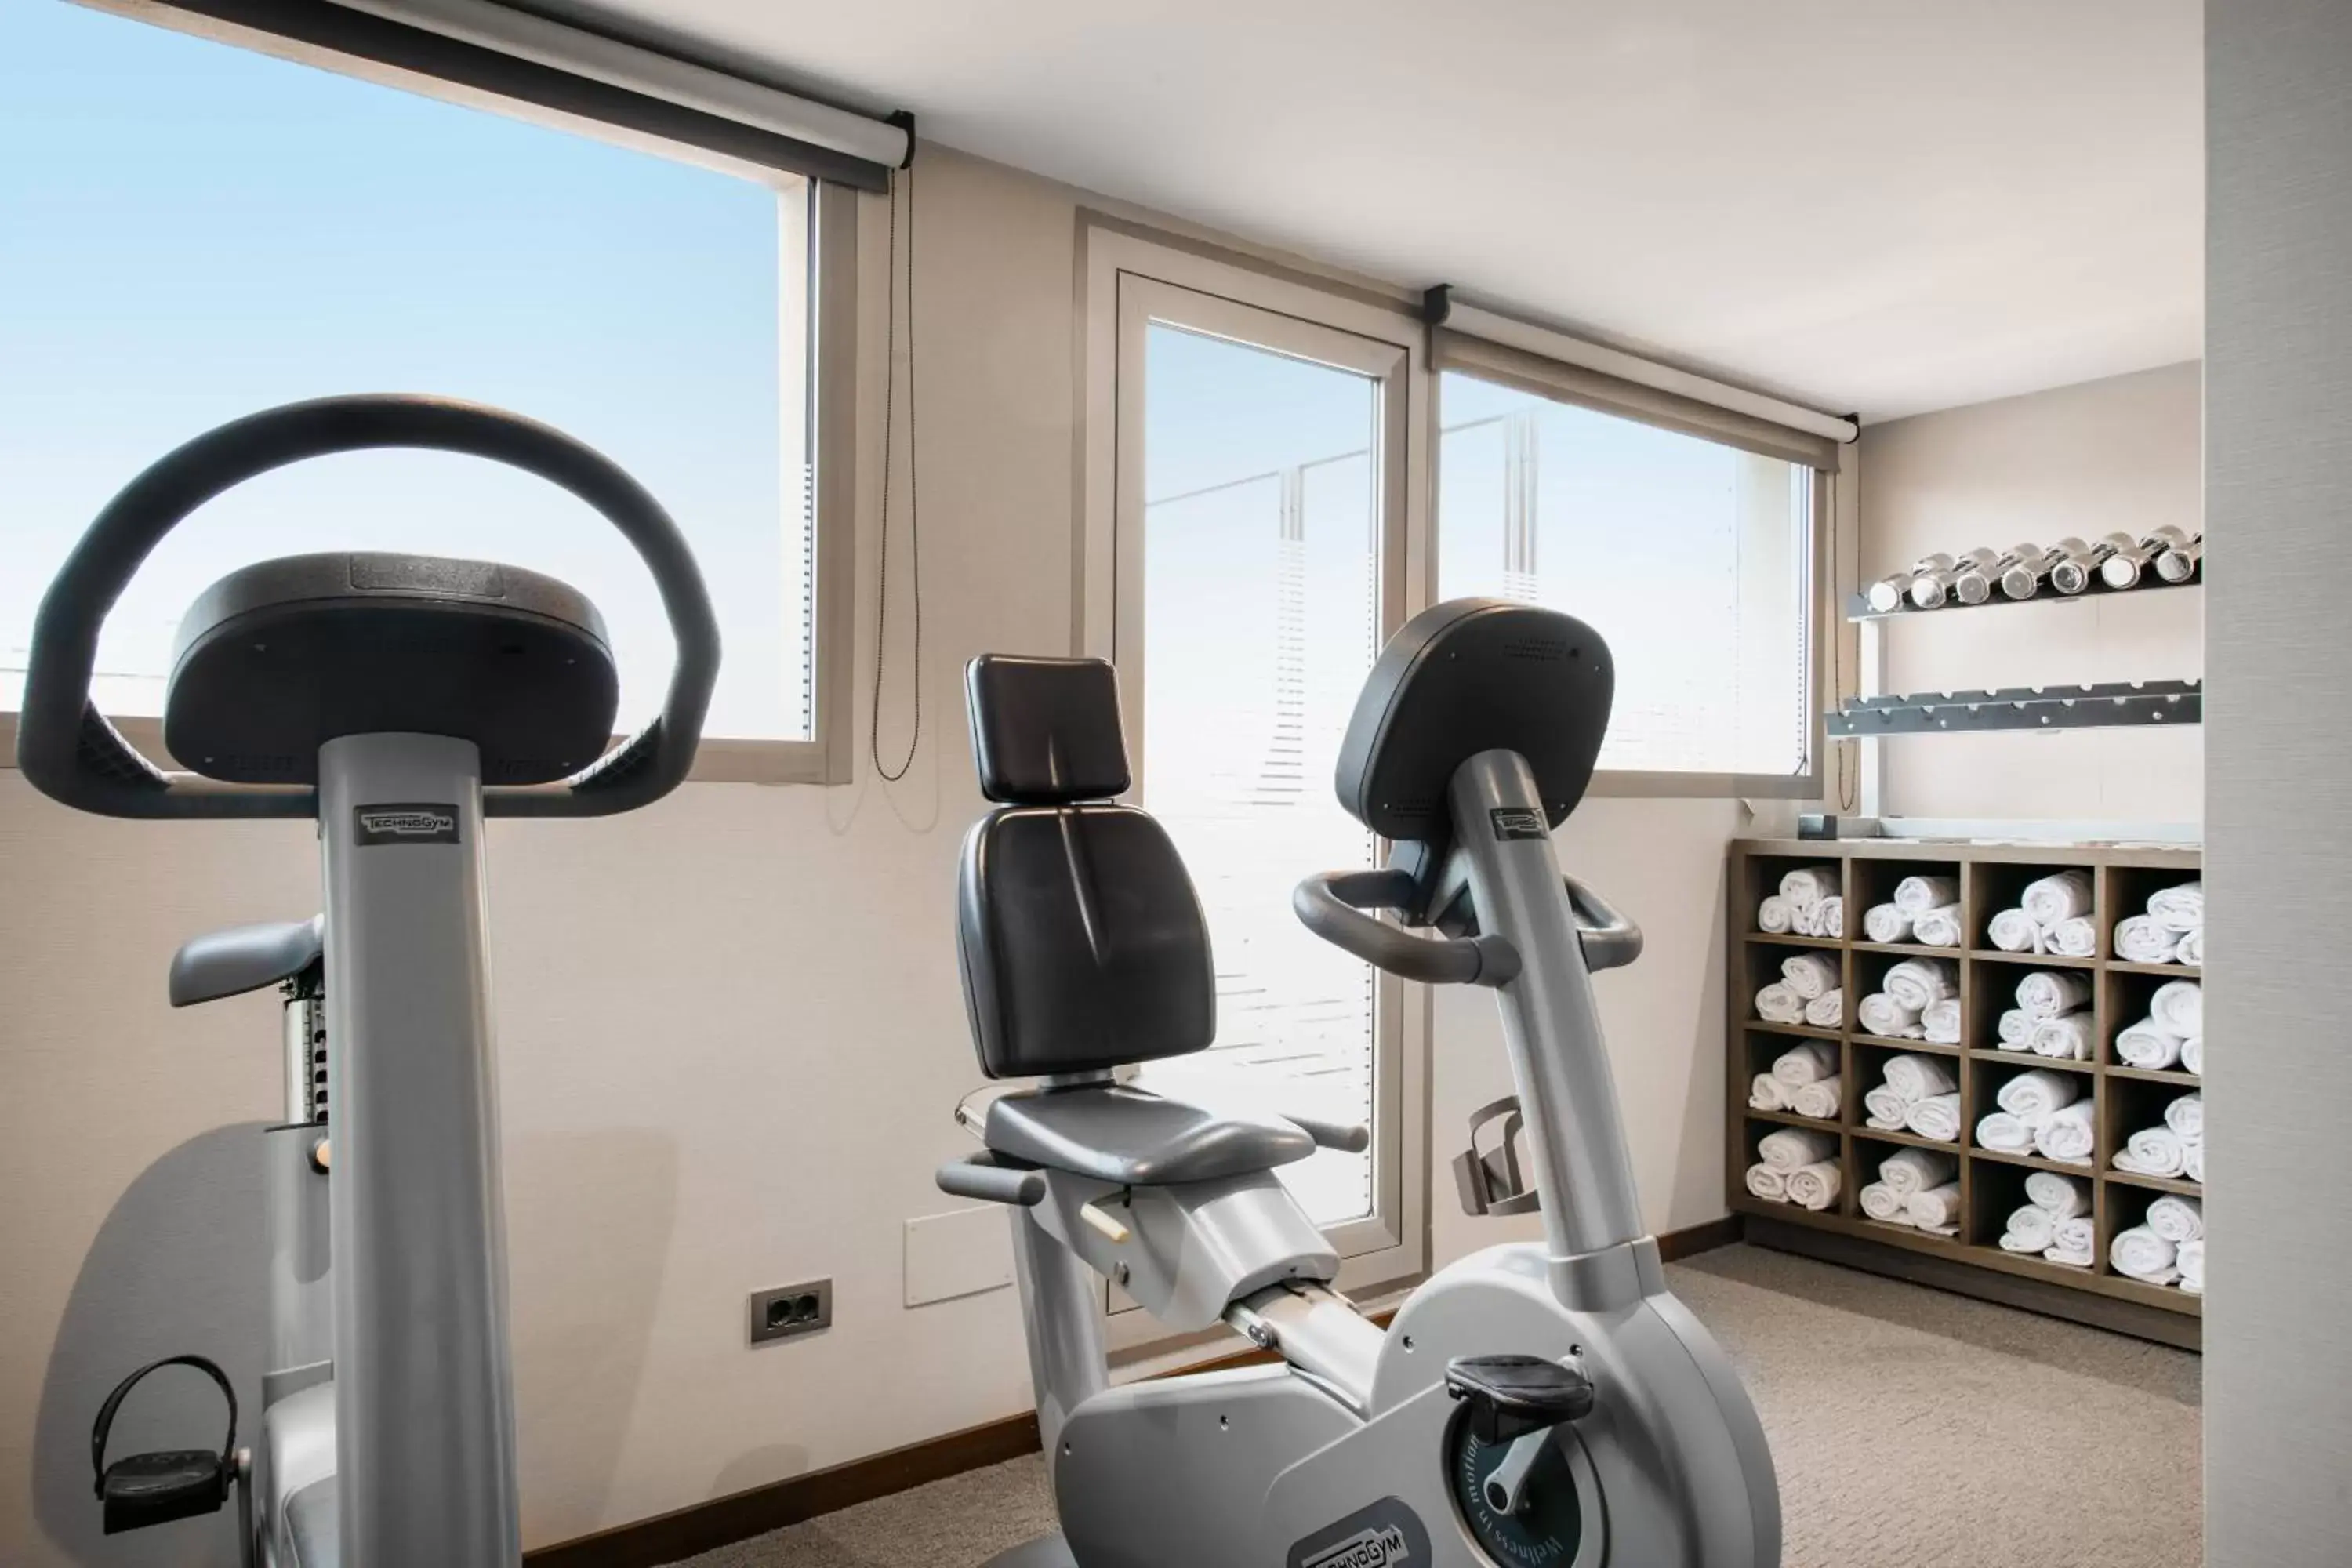 Fitness centre/facilities, Fitness Center/Facilities in AC Hotel Los Vascos by Marriott